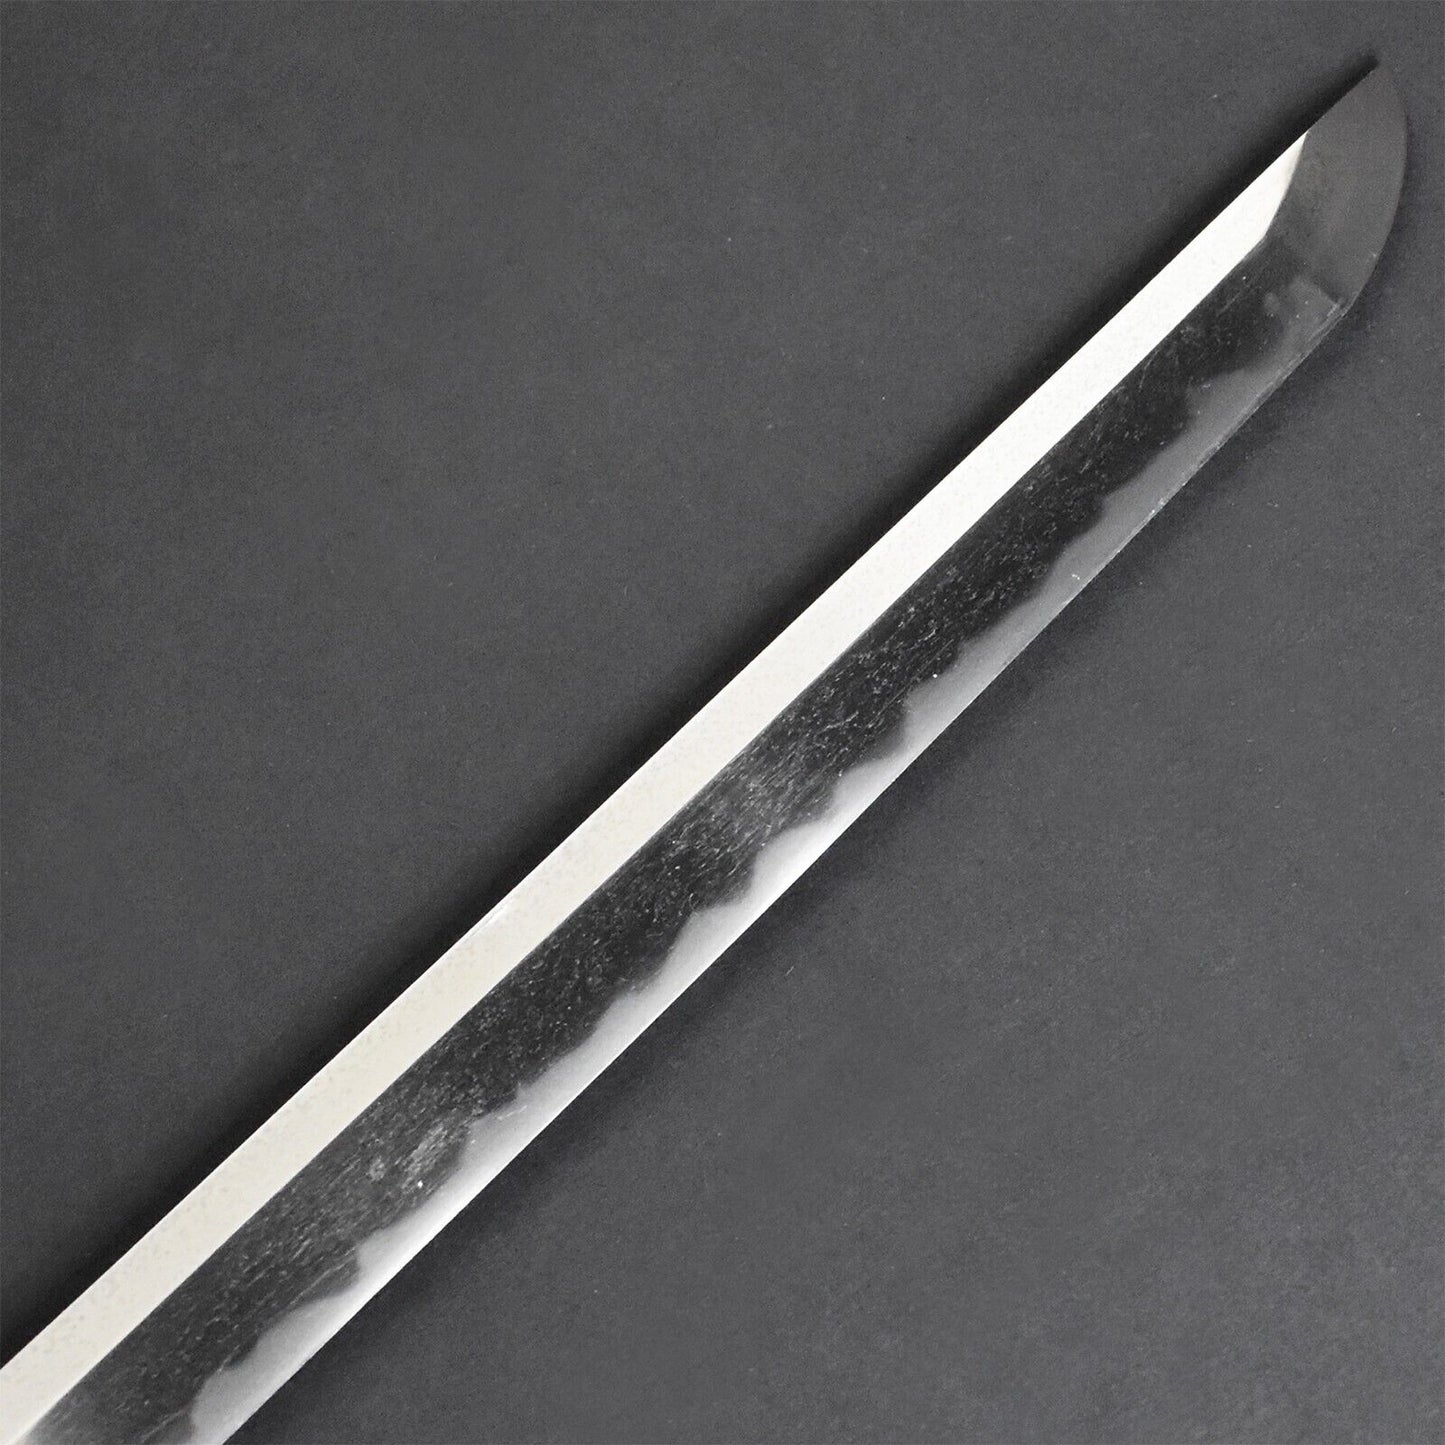 Antique Japanese Weapon Nihonto Katana Samurai Sword Signed from Edo Era.